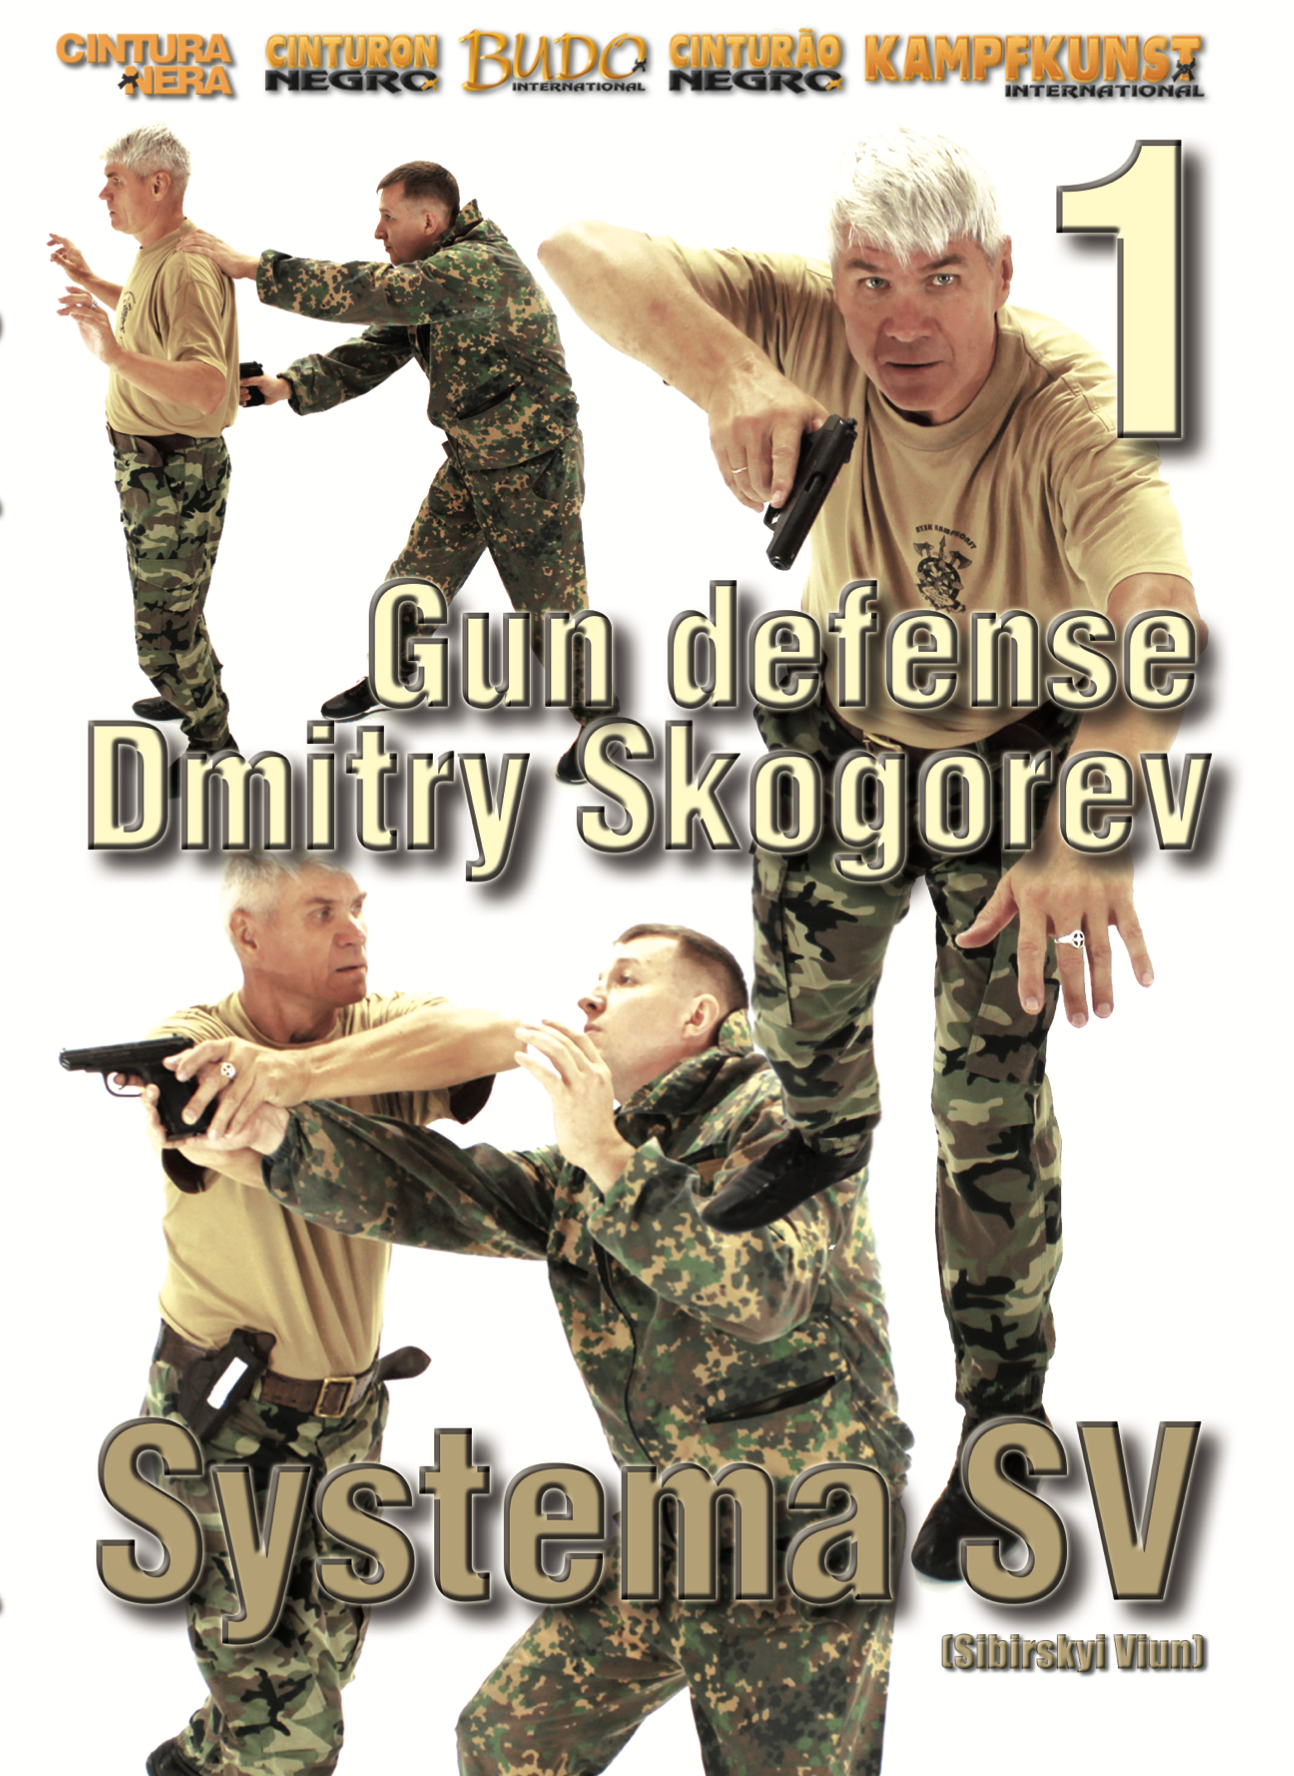 Systema SV Gun Defense DVD 1 with Dmitry Skogorev - Budovideos Inc